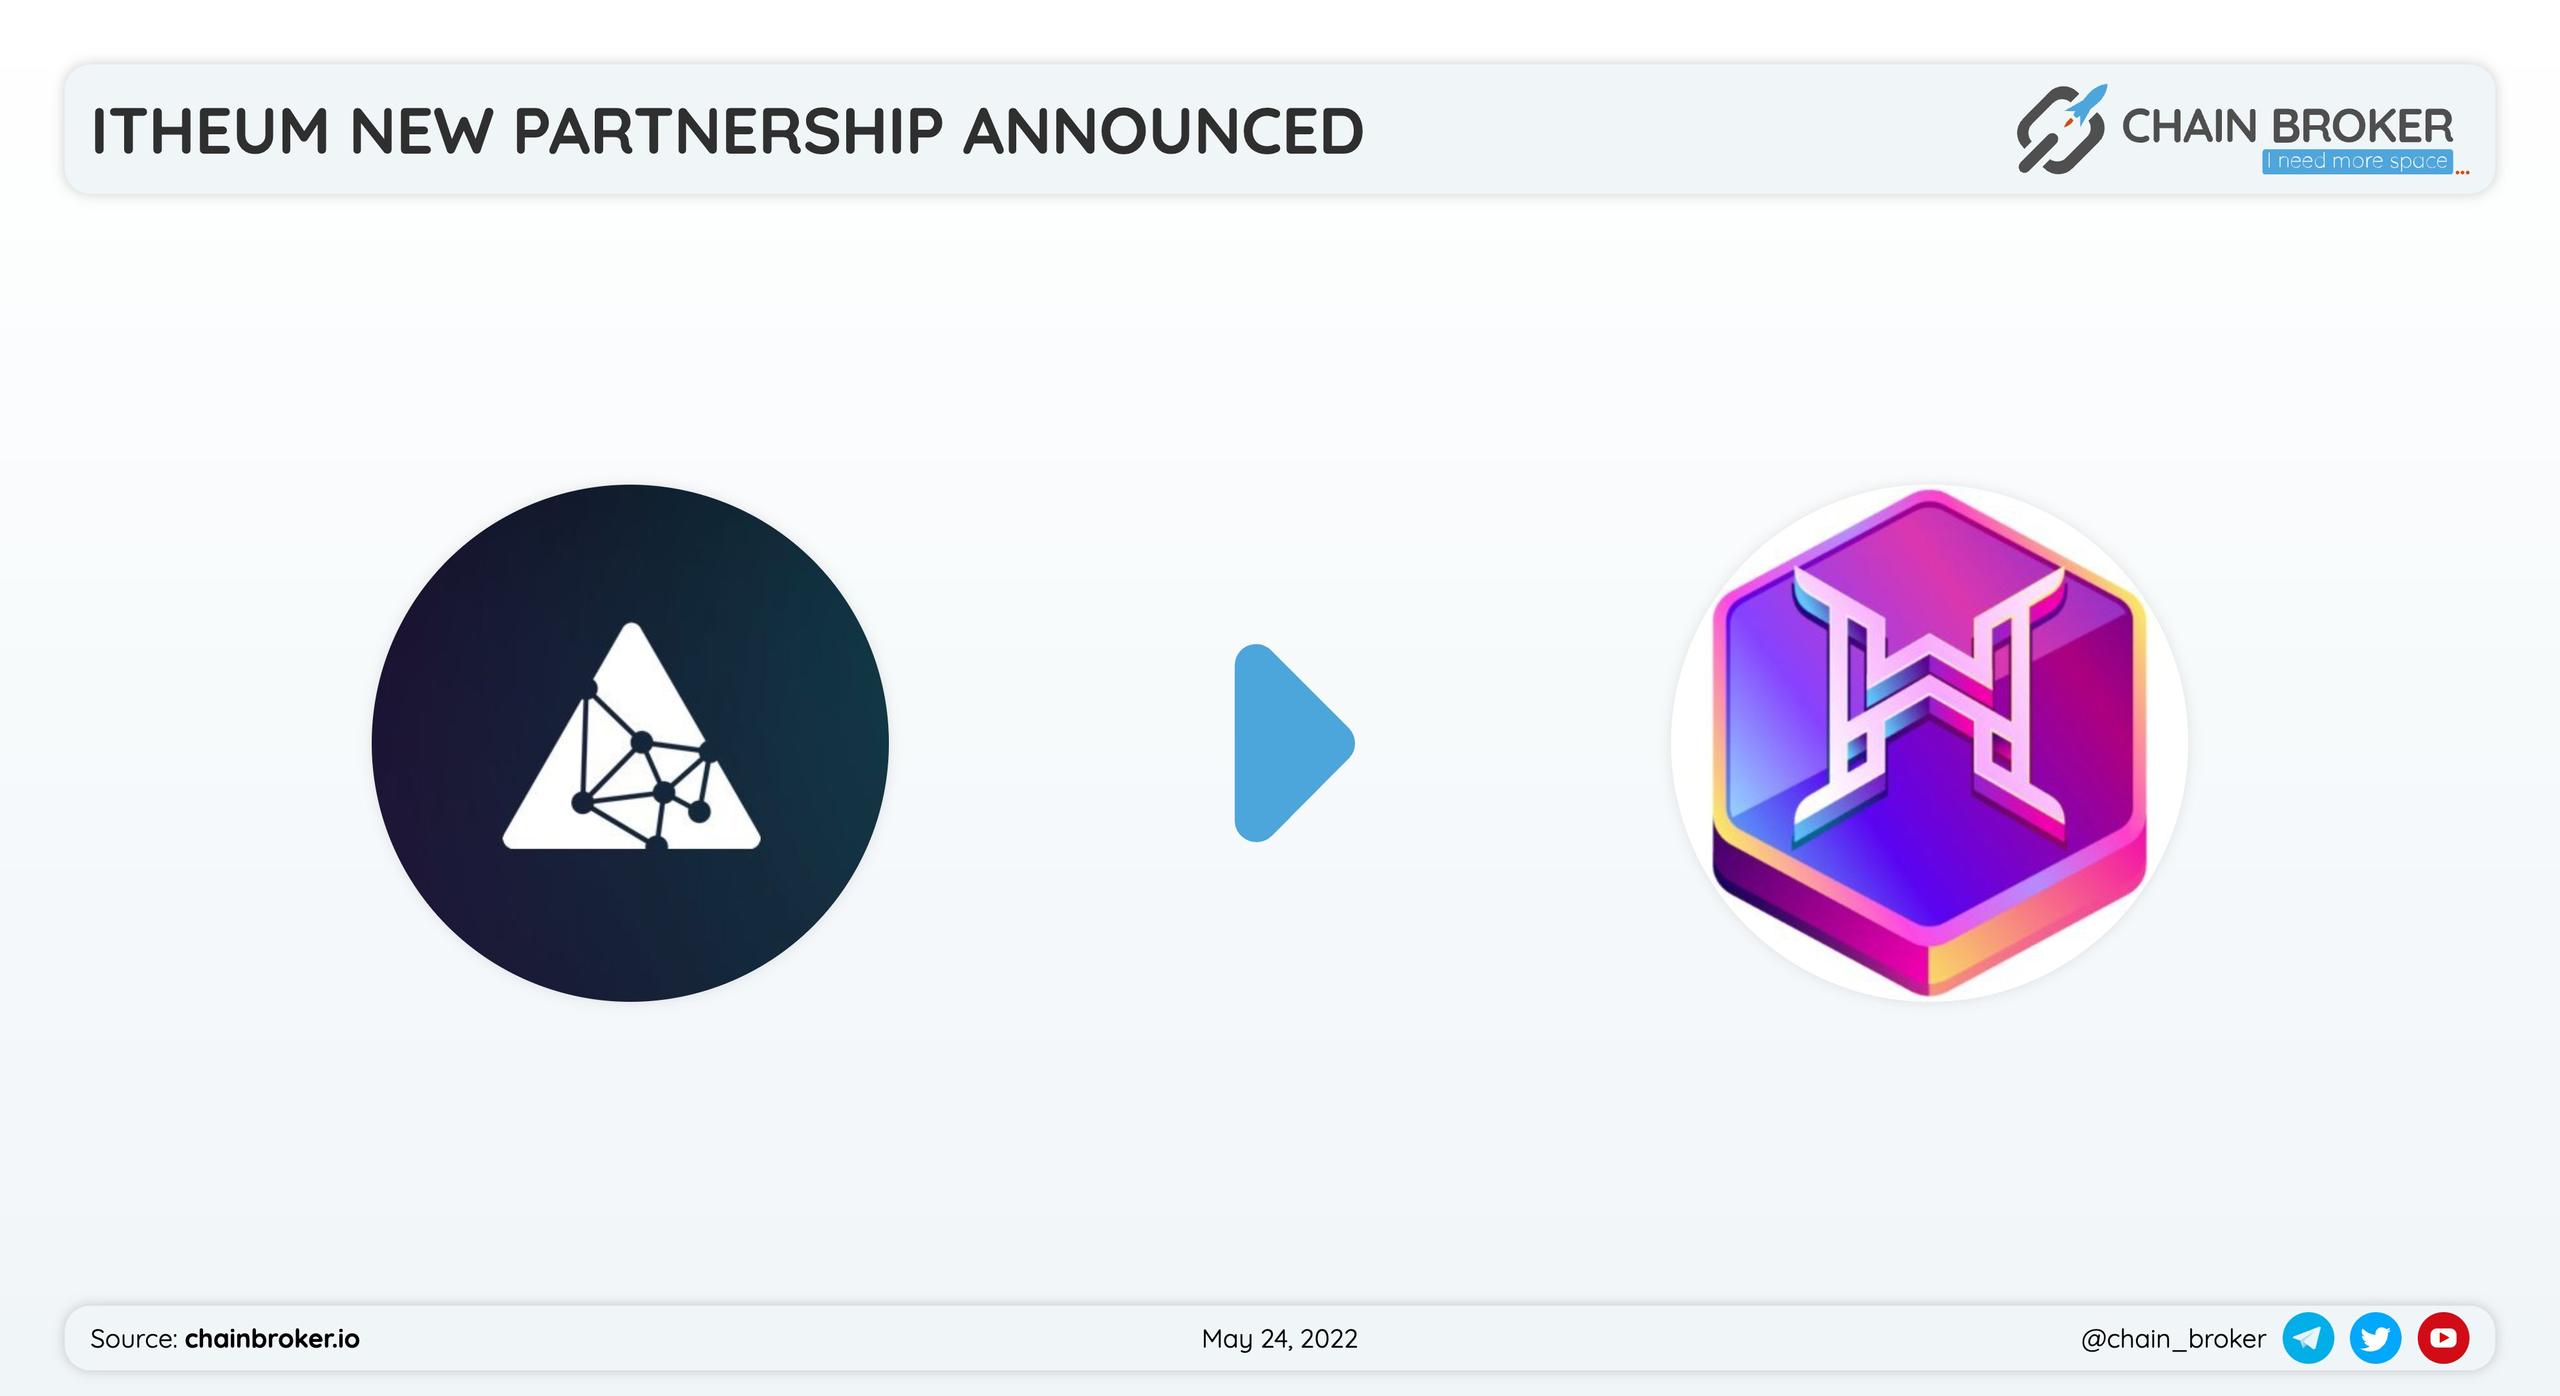 Itheum has partnered with WonderHero